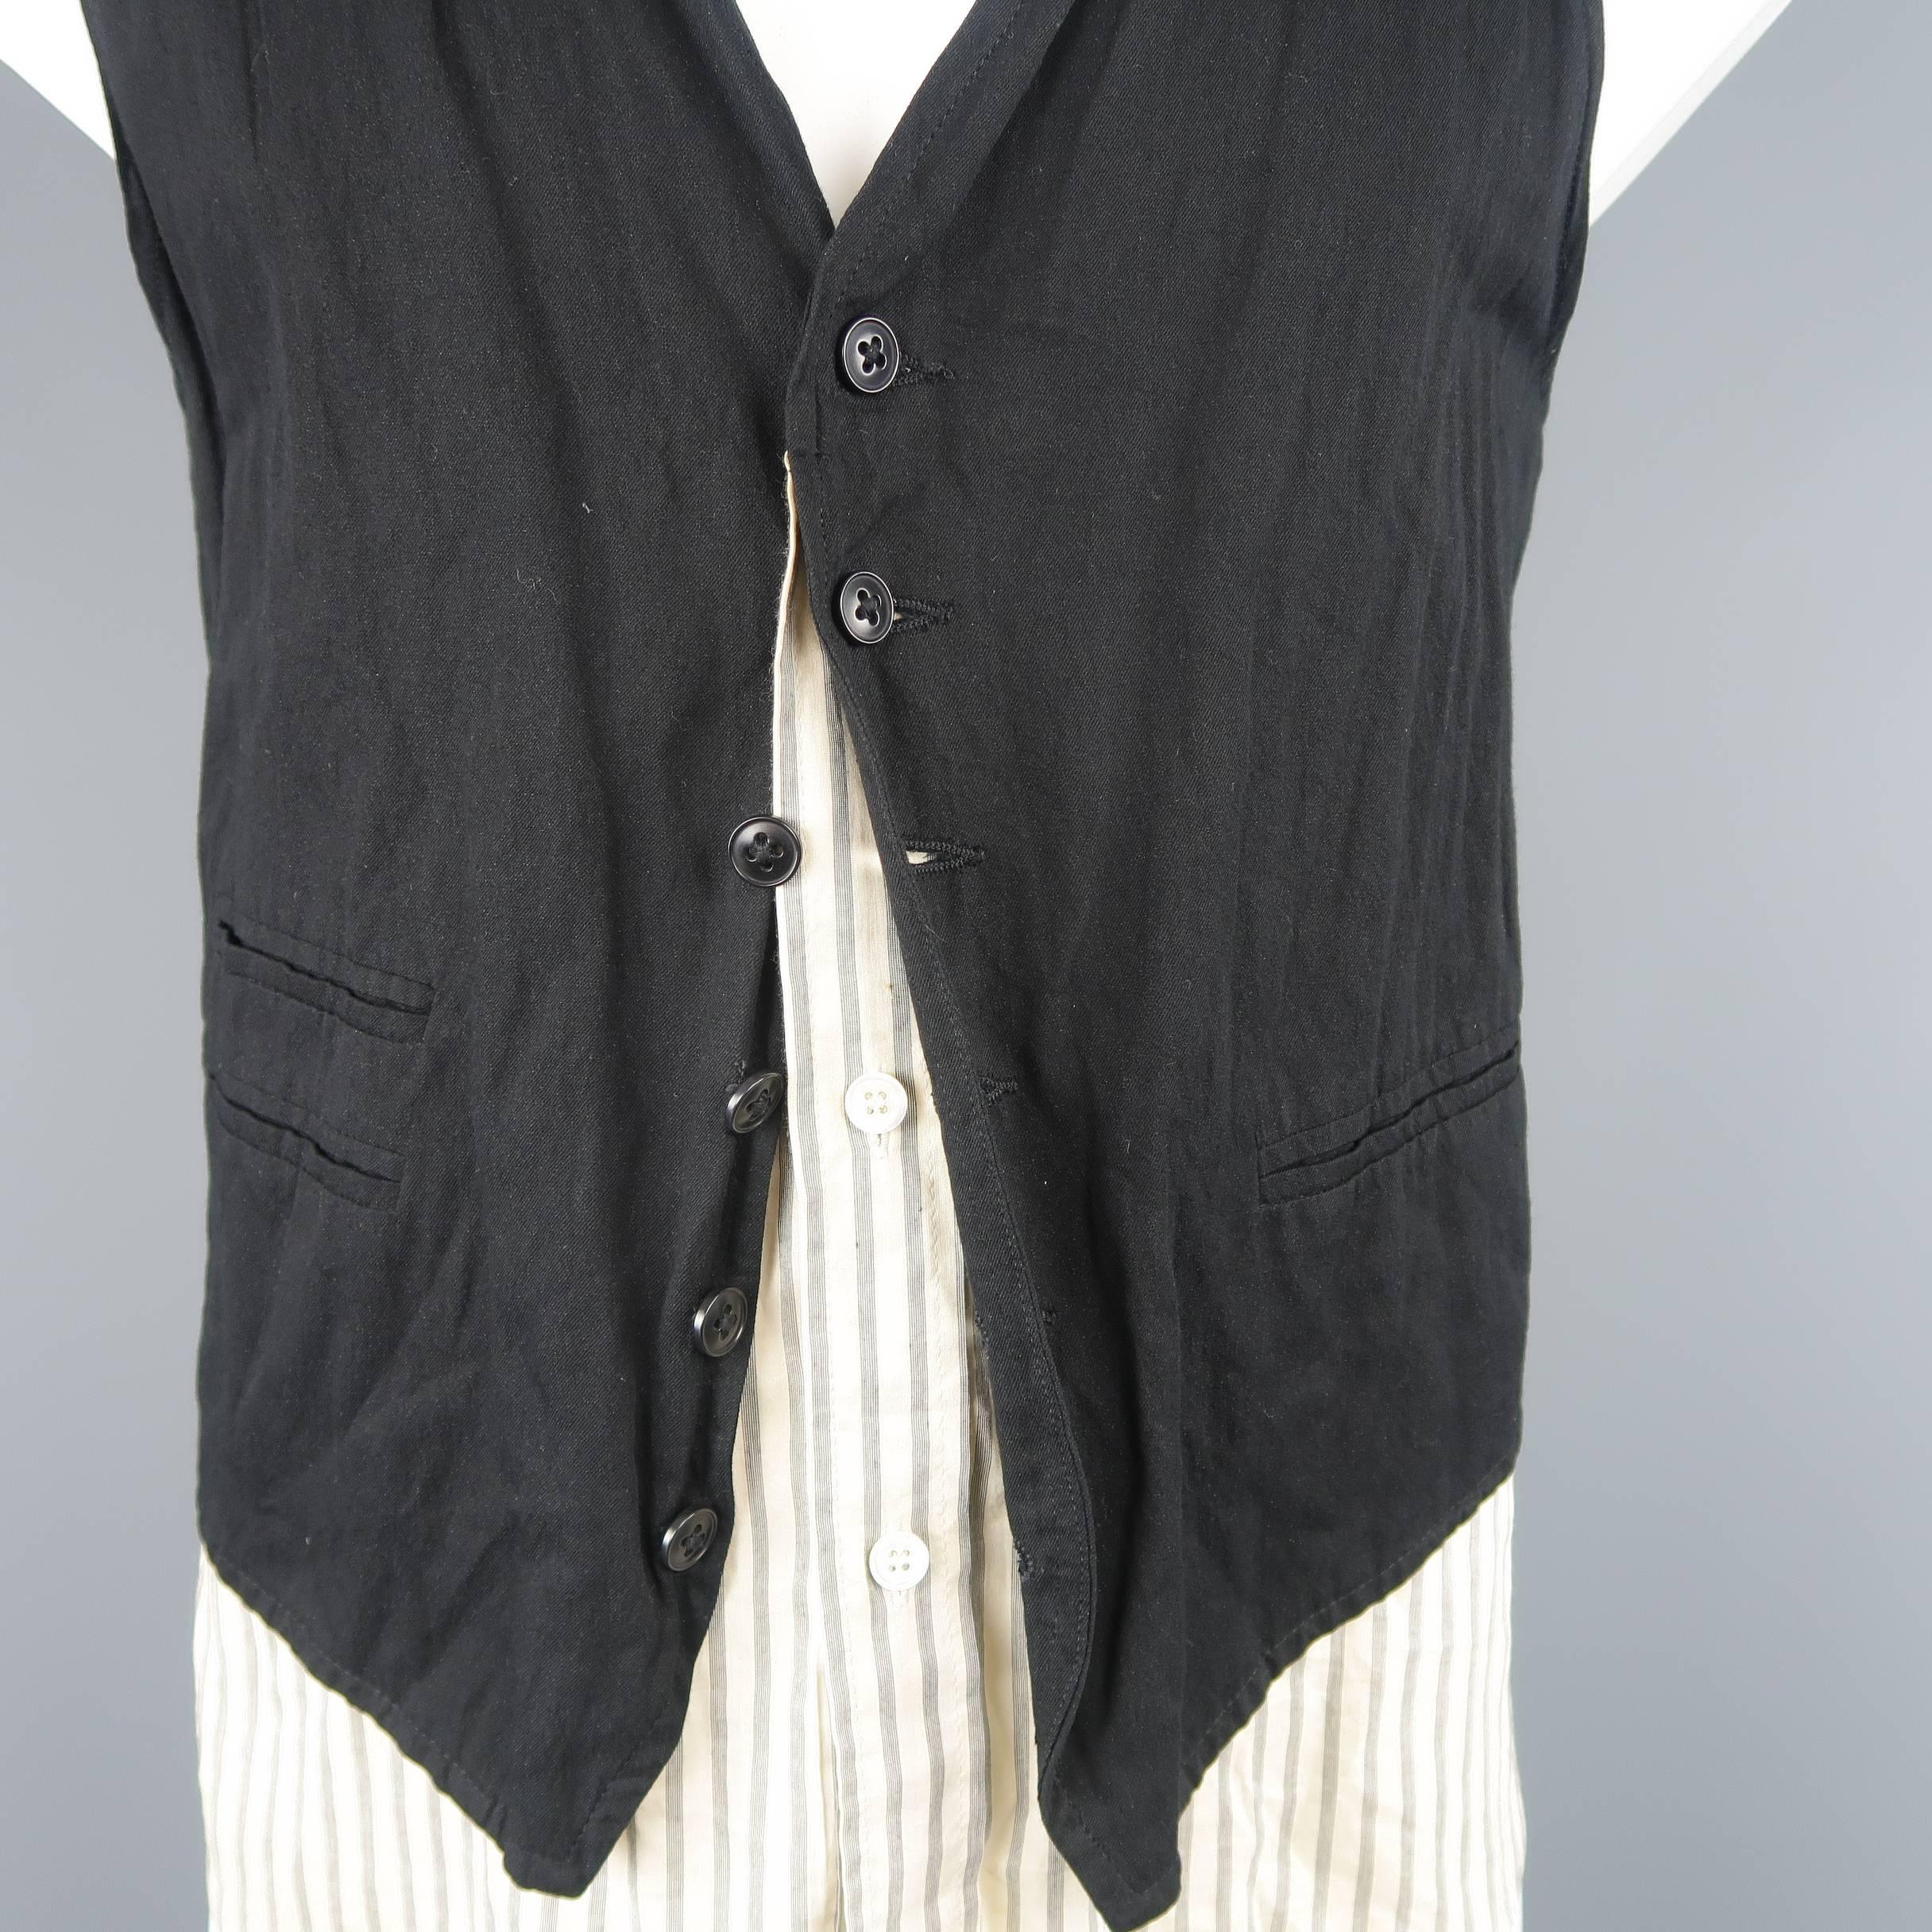 Ann Demeulemeester Men's Black and Beige Striped Shirt Layered Vest 5